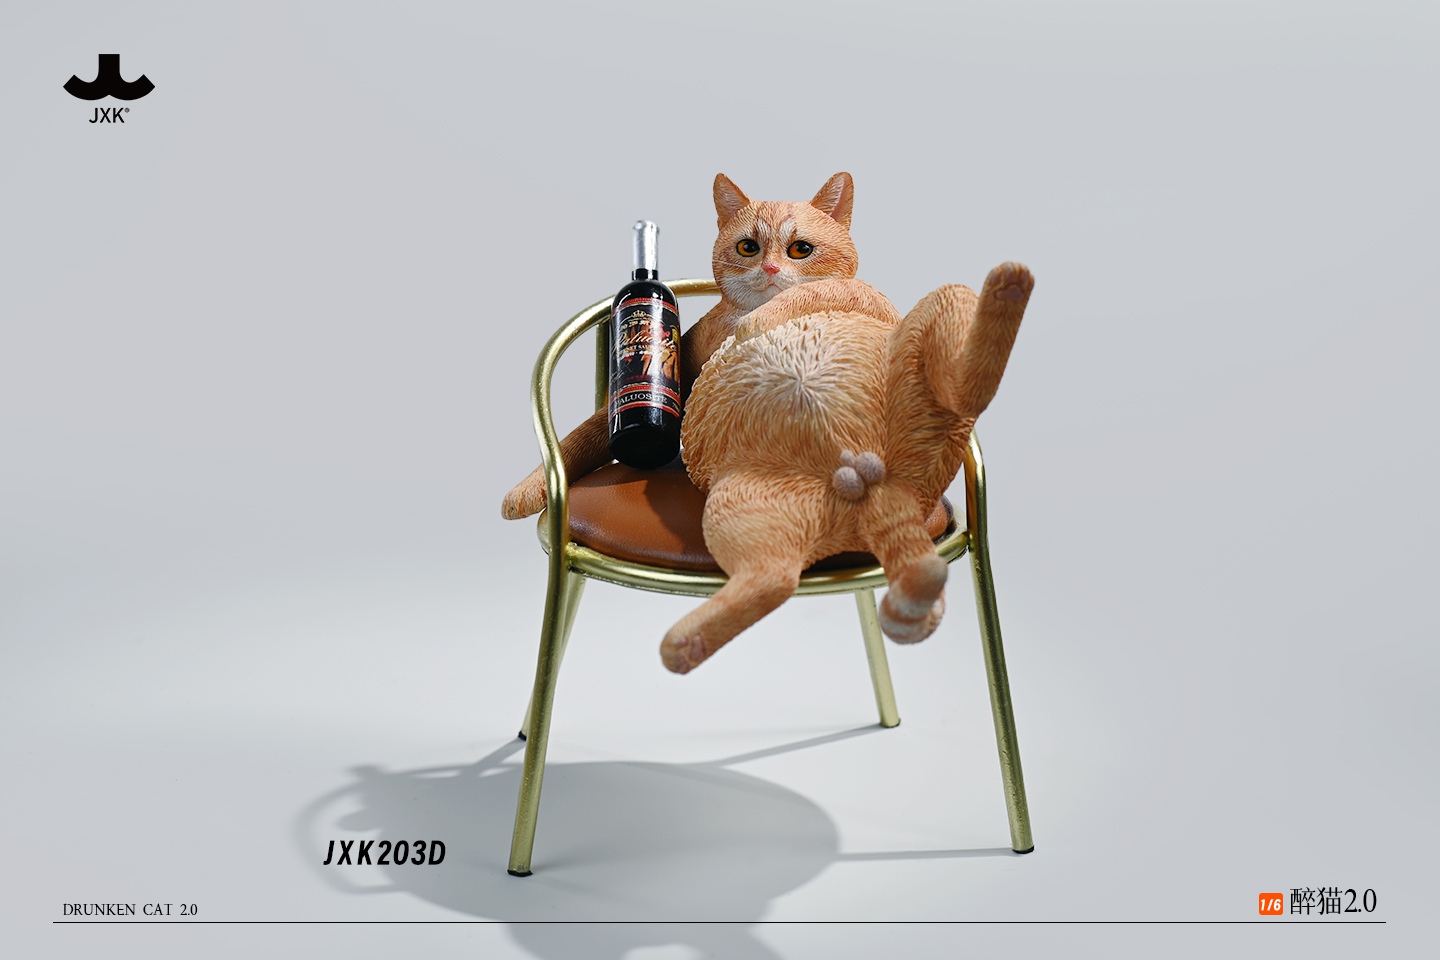 jxk - NEW PRODUCT: JXK - Drunken Cat 2.0 0953